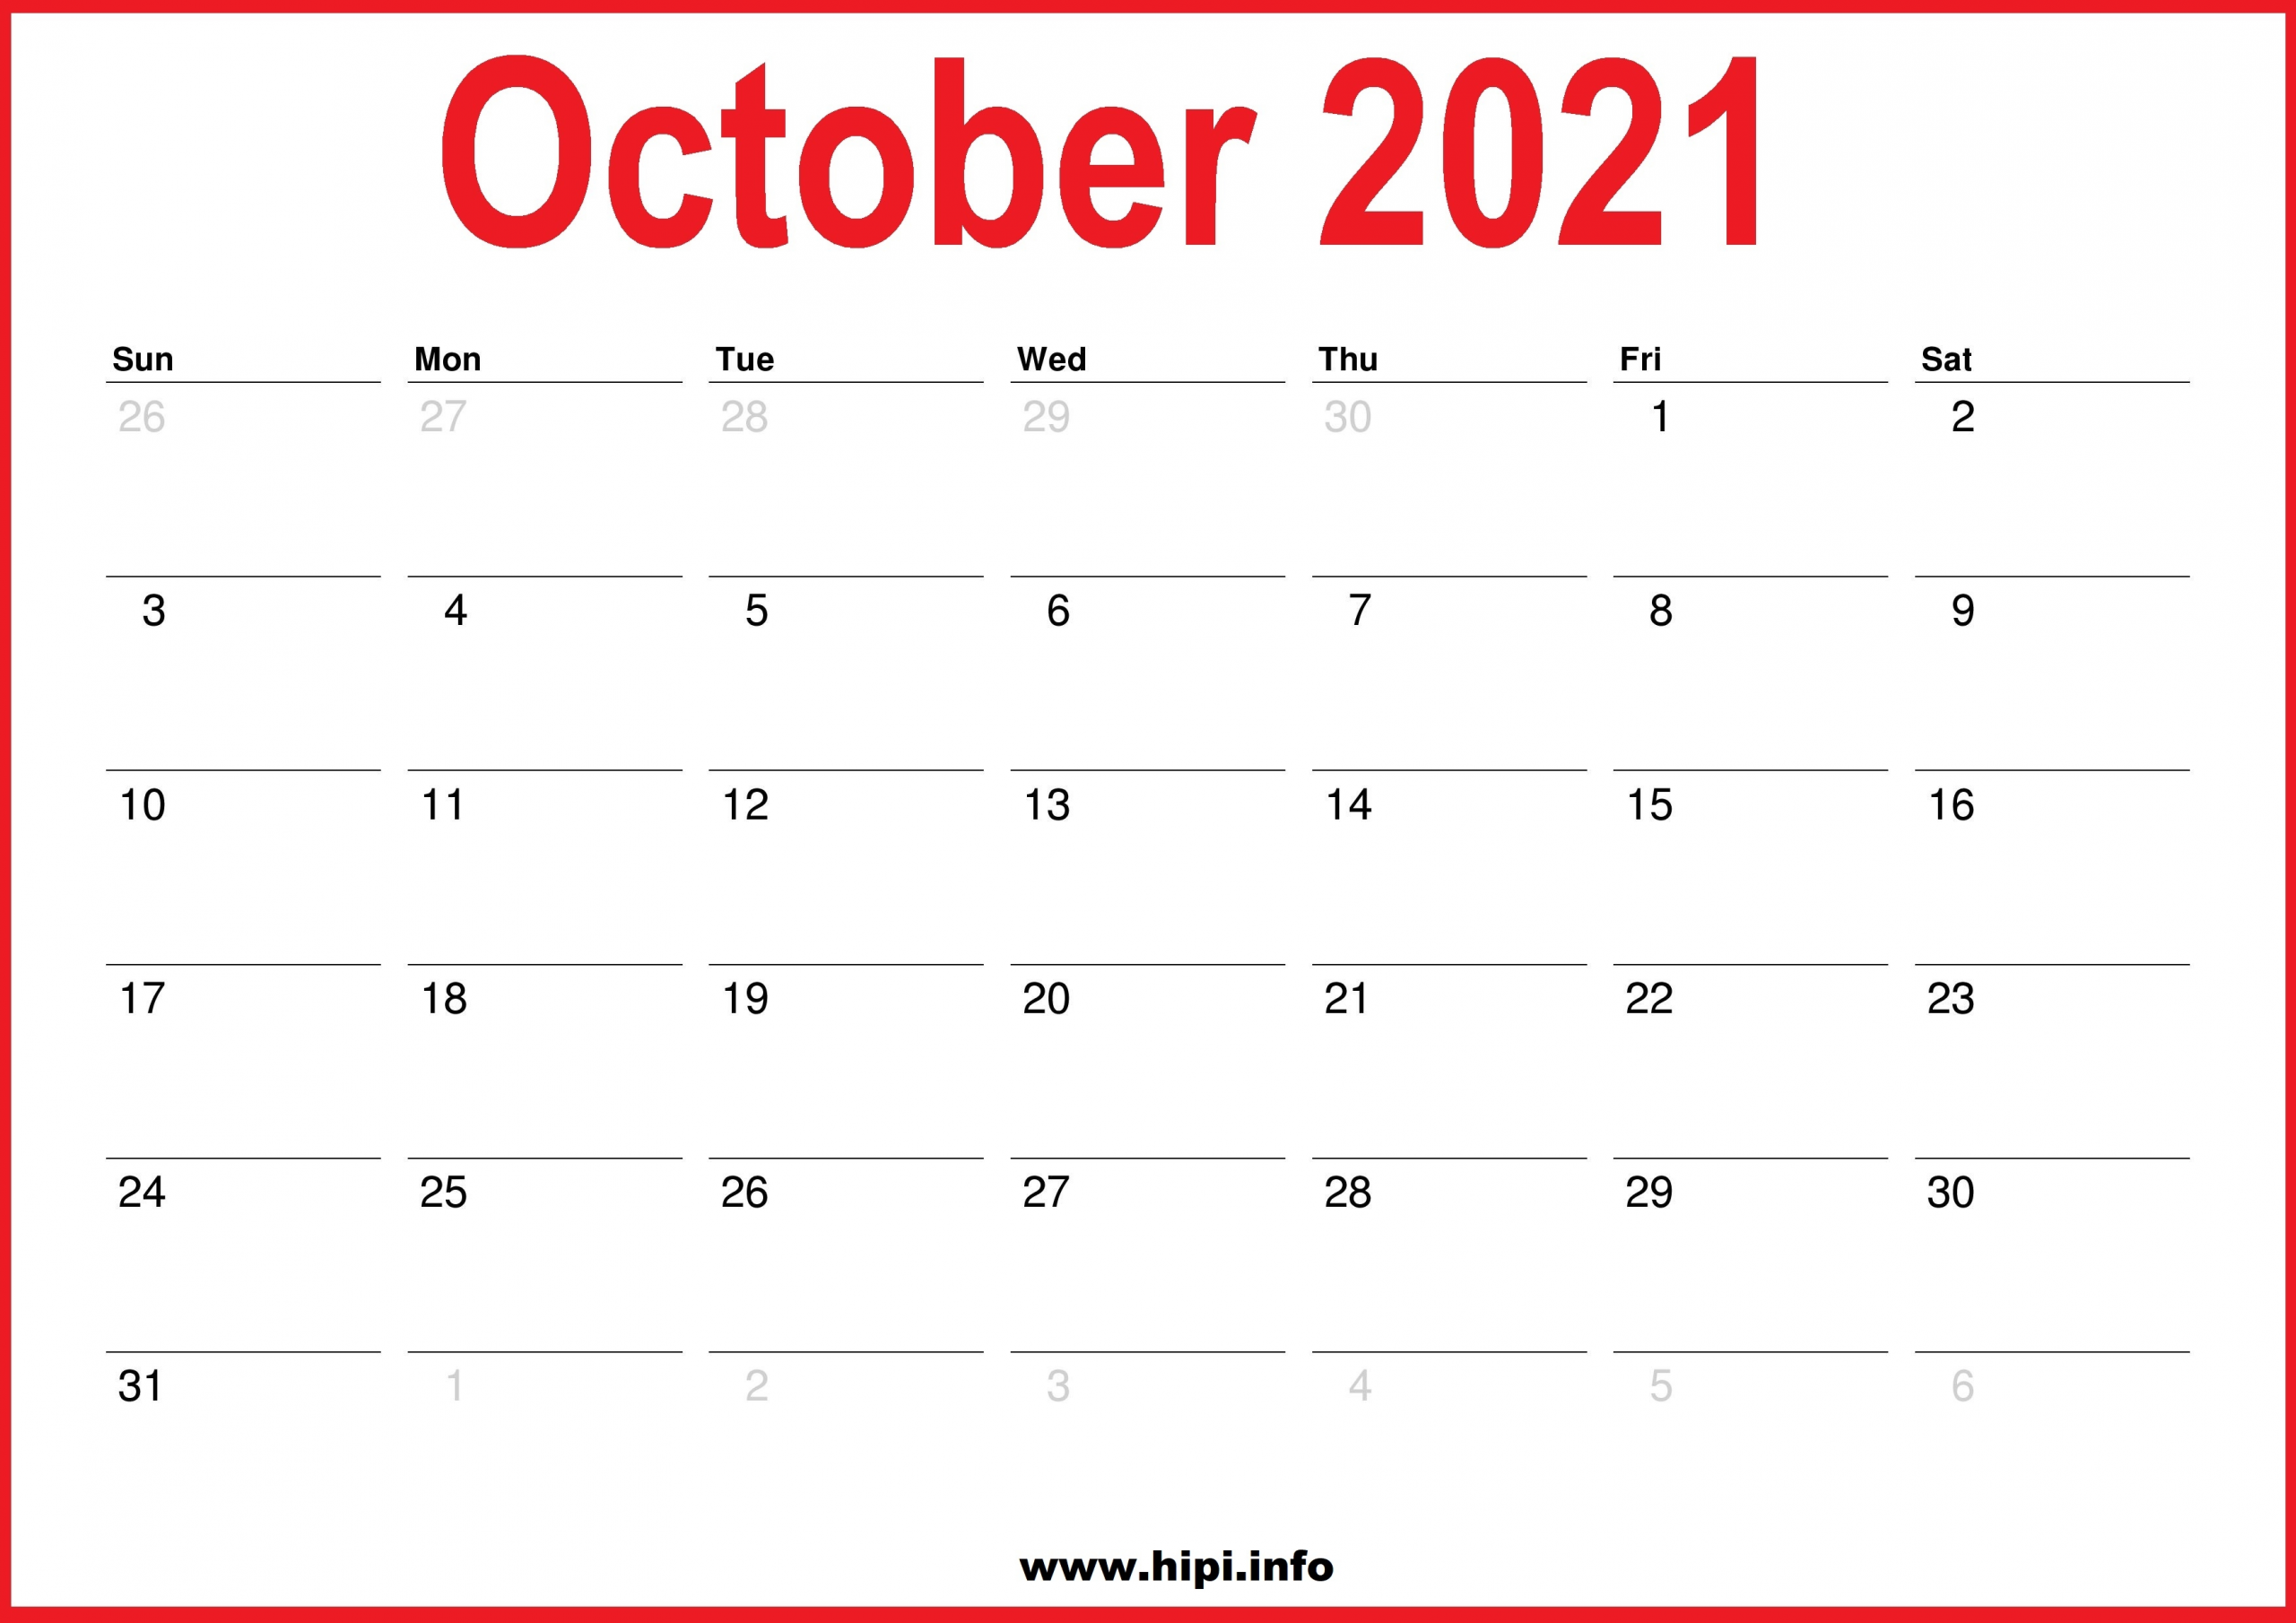 October 2021 Calendar Wallpapers - Wallpaper Cave